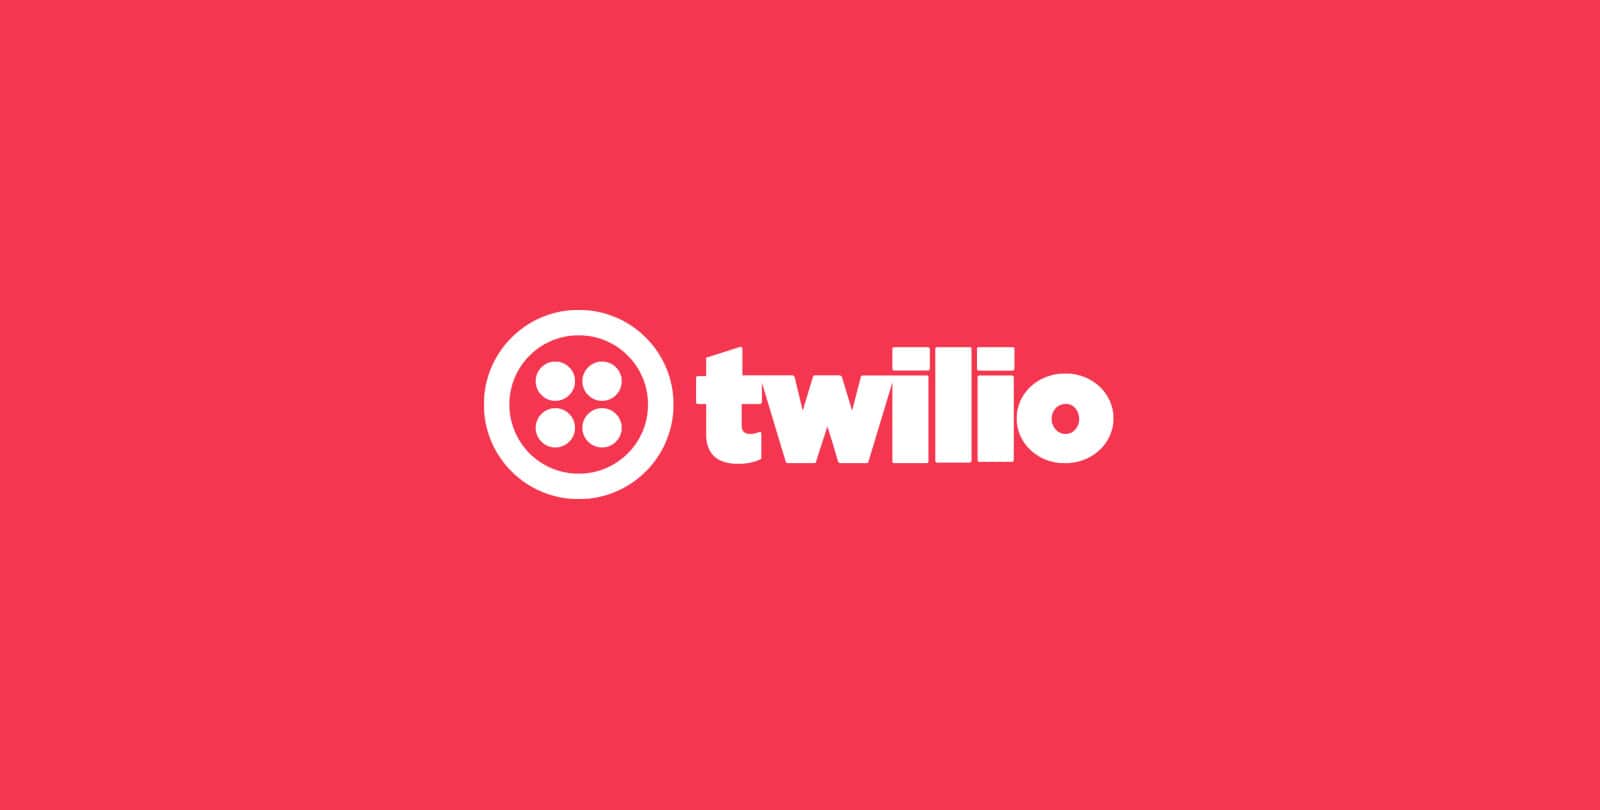 Le logo de Twilio